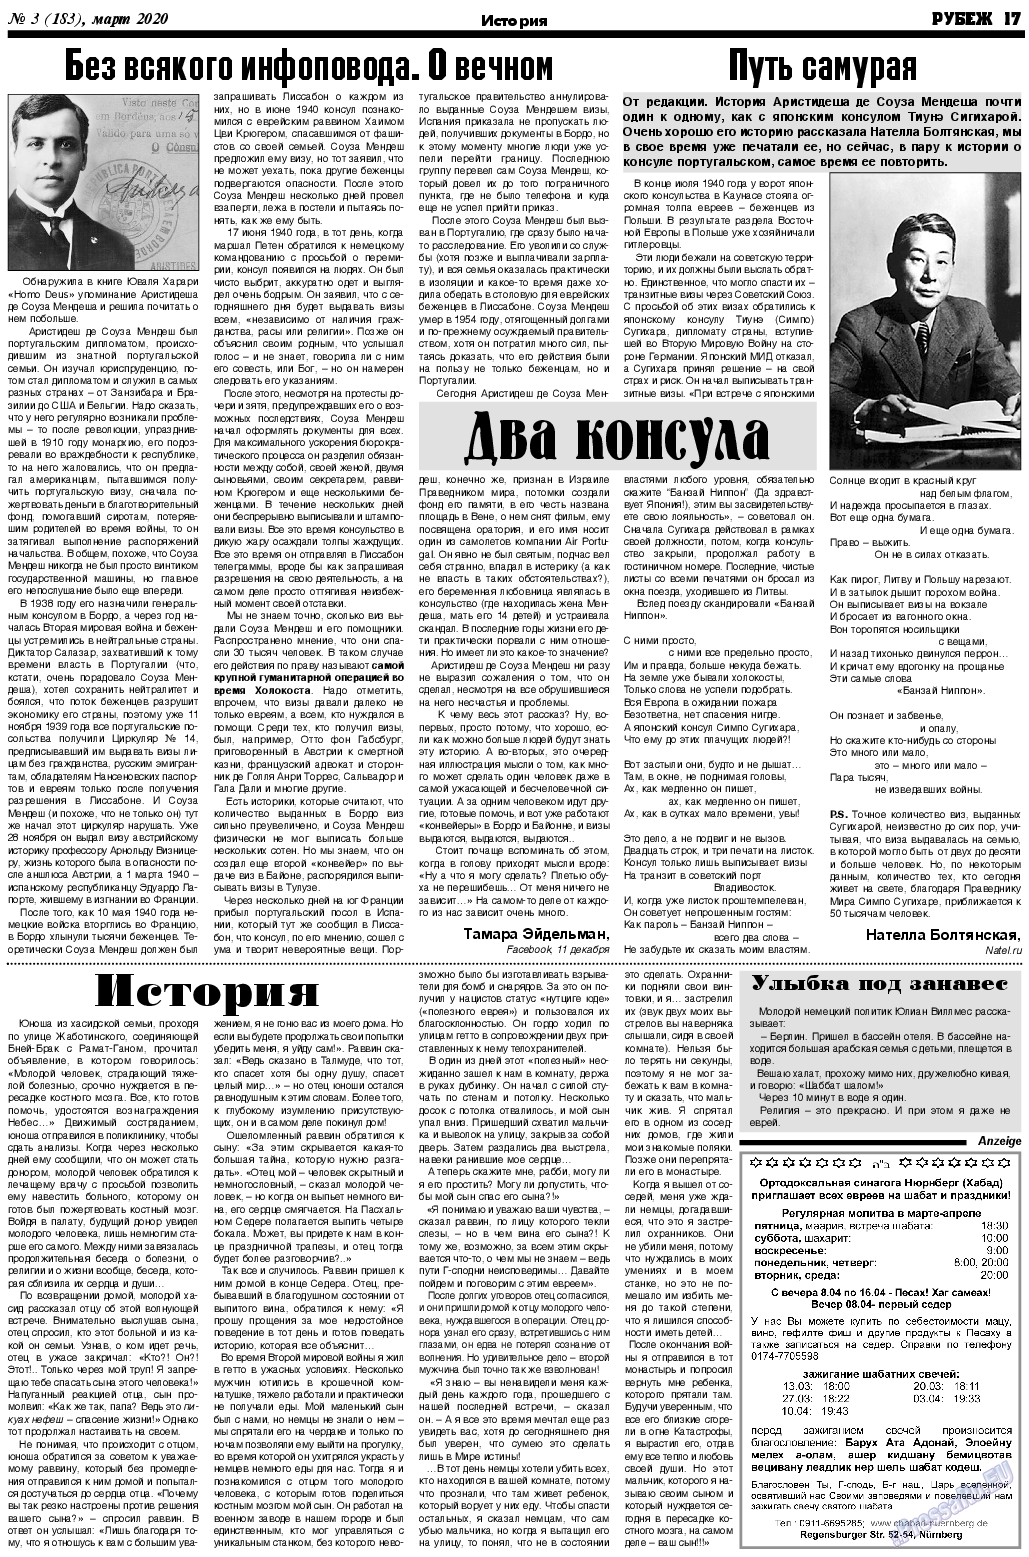 Рубеж, газета. 2020 №3 стр.17